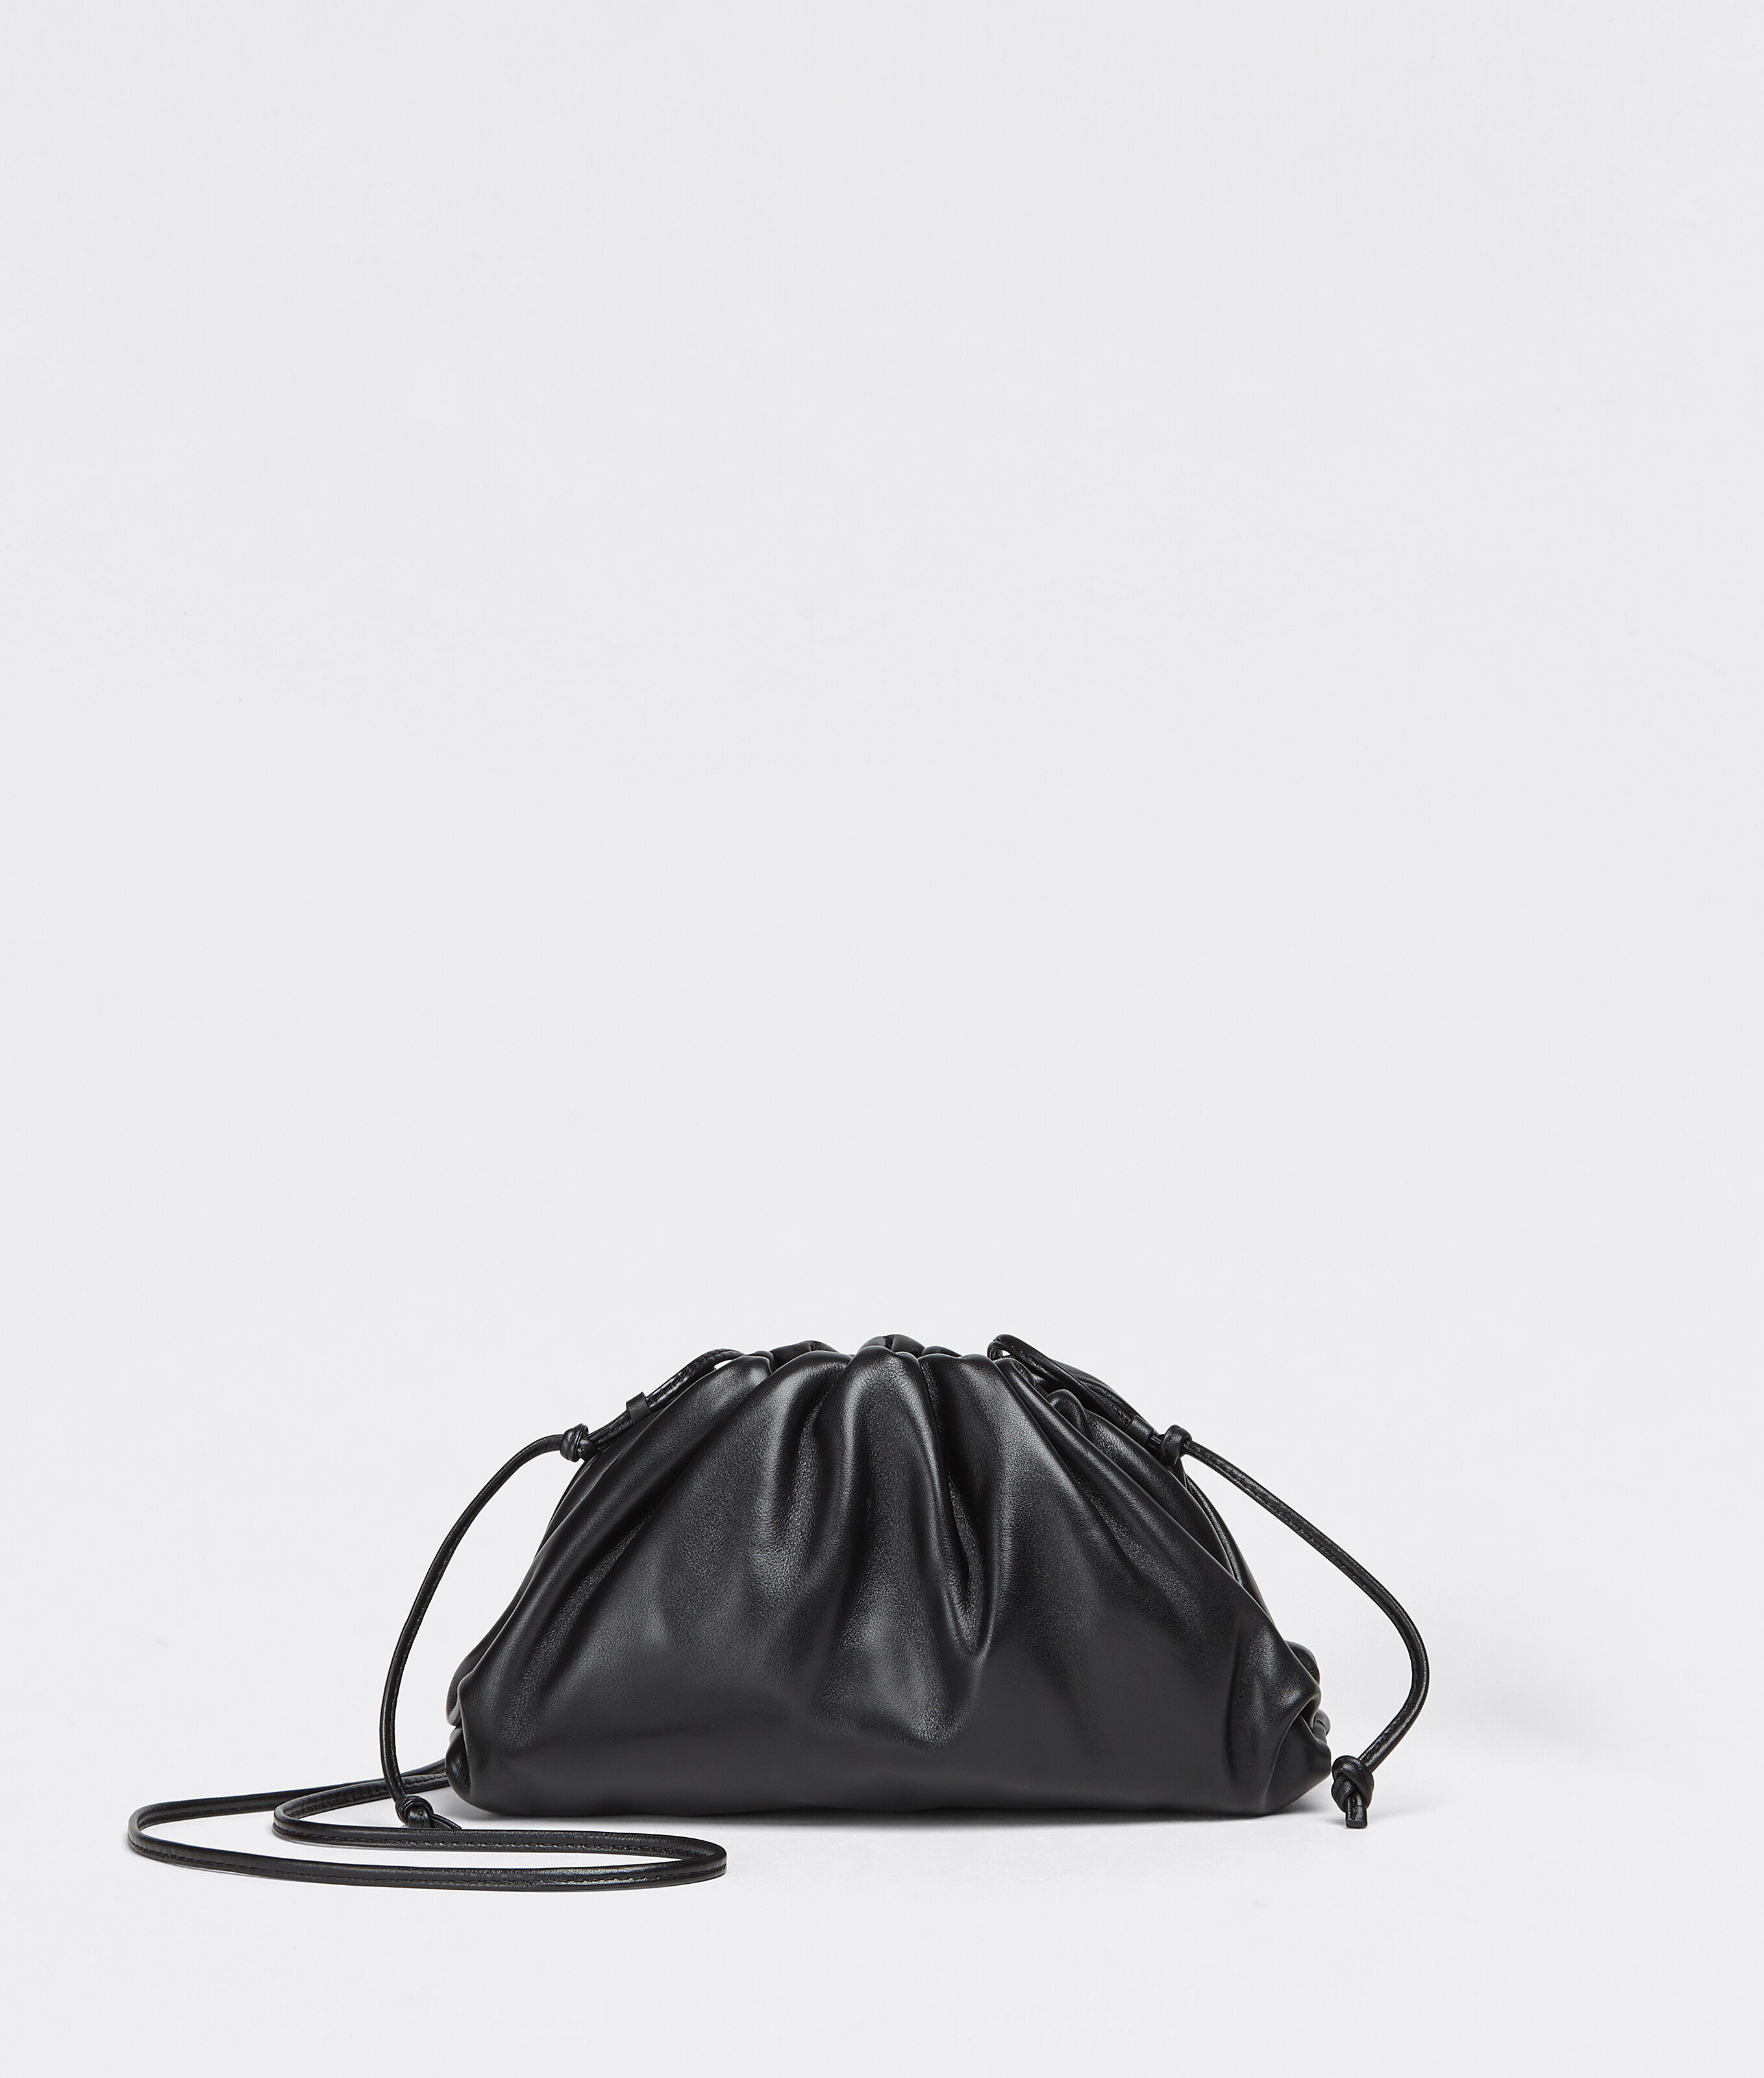 Bottega Veneta® Women's Mini Pouch in Black. Shop online now.